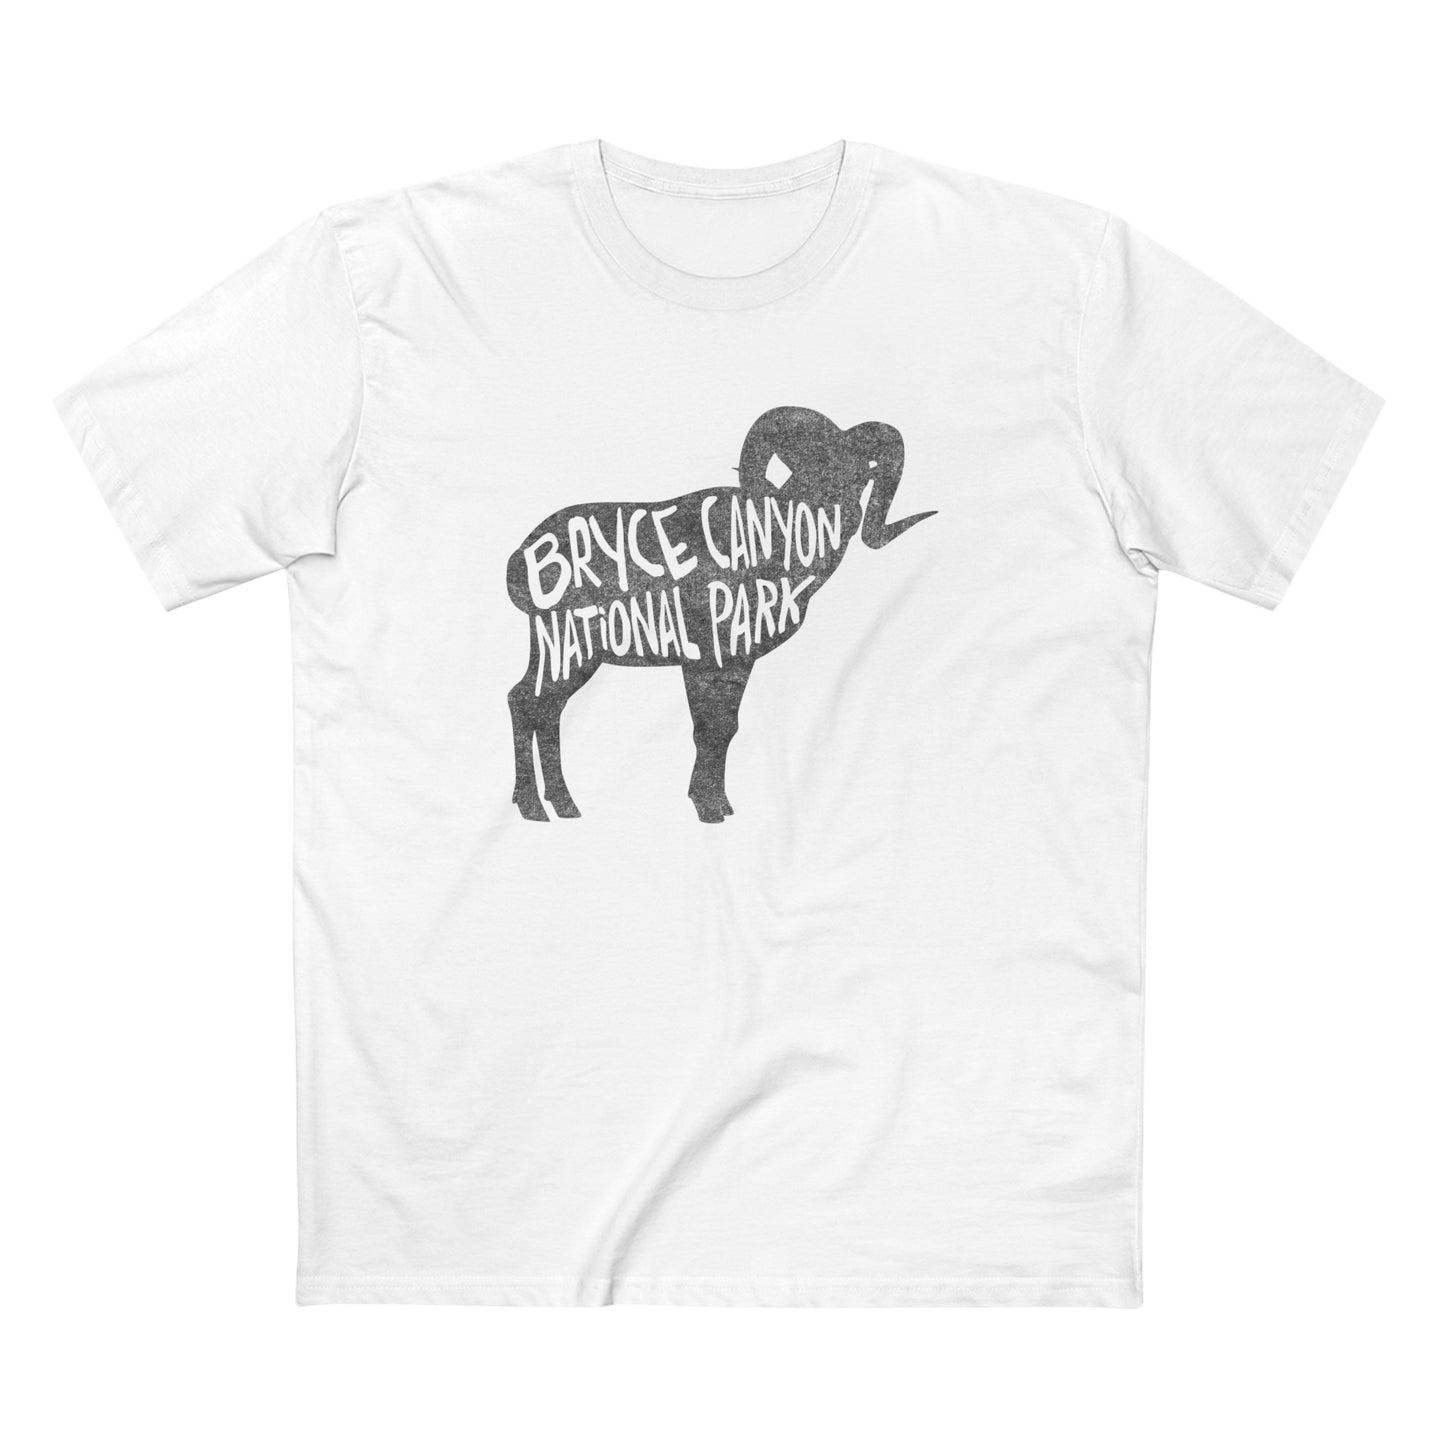 Bryce Canyon National Park T-Shirt - Bighorn Sheep